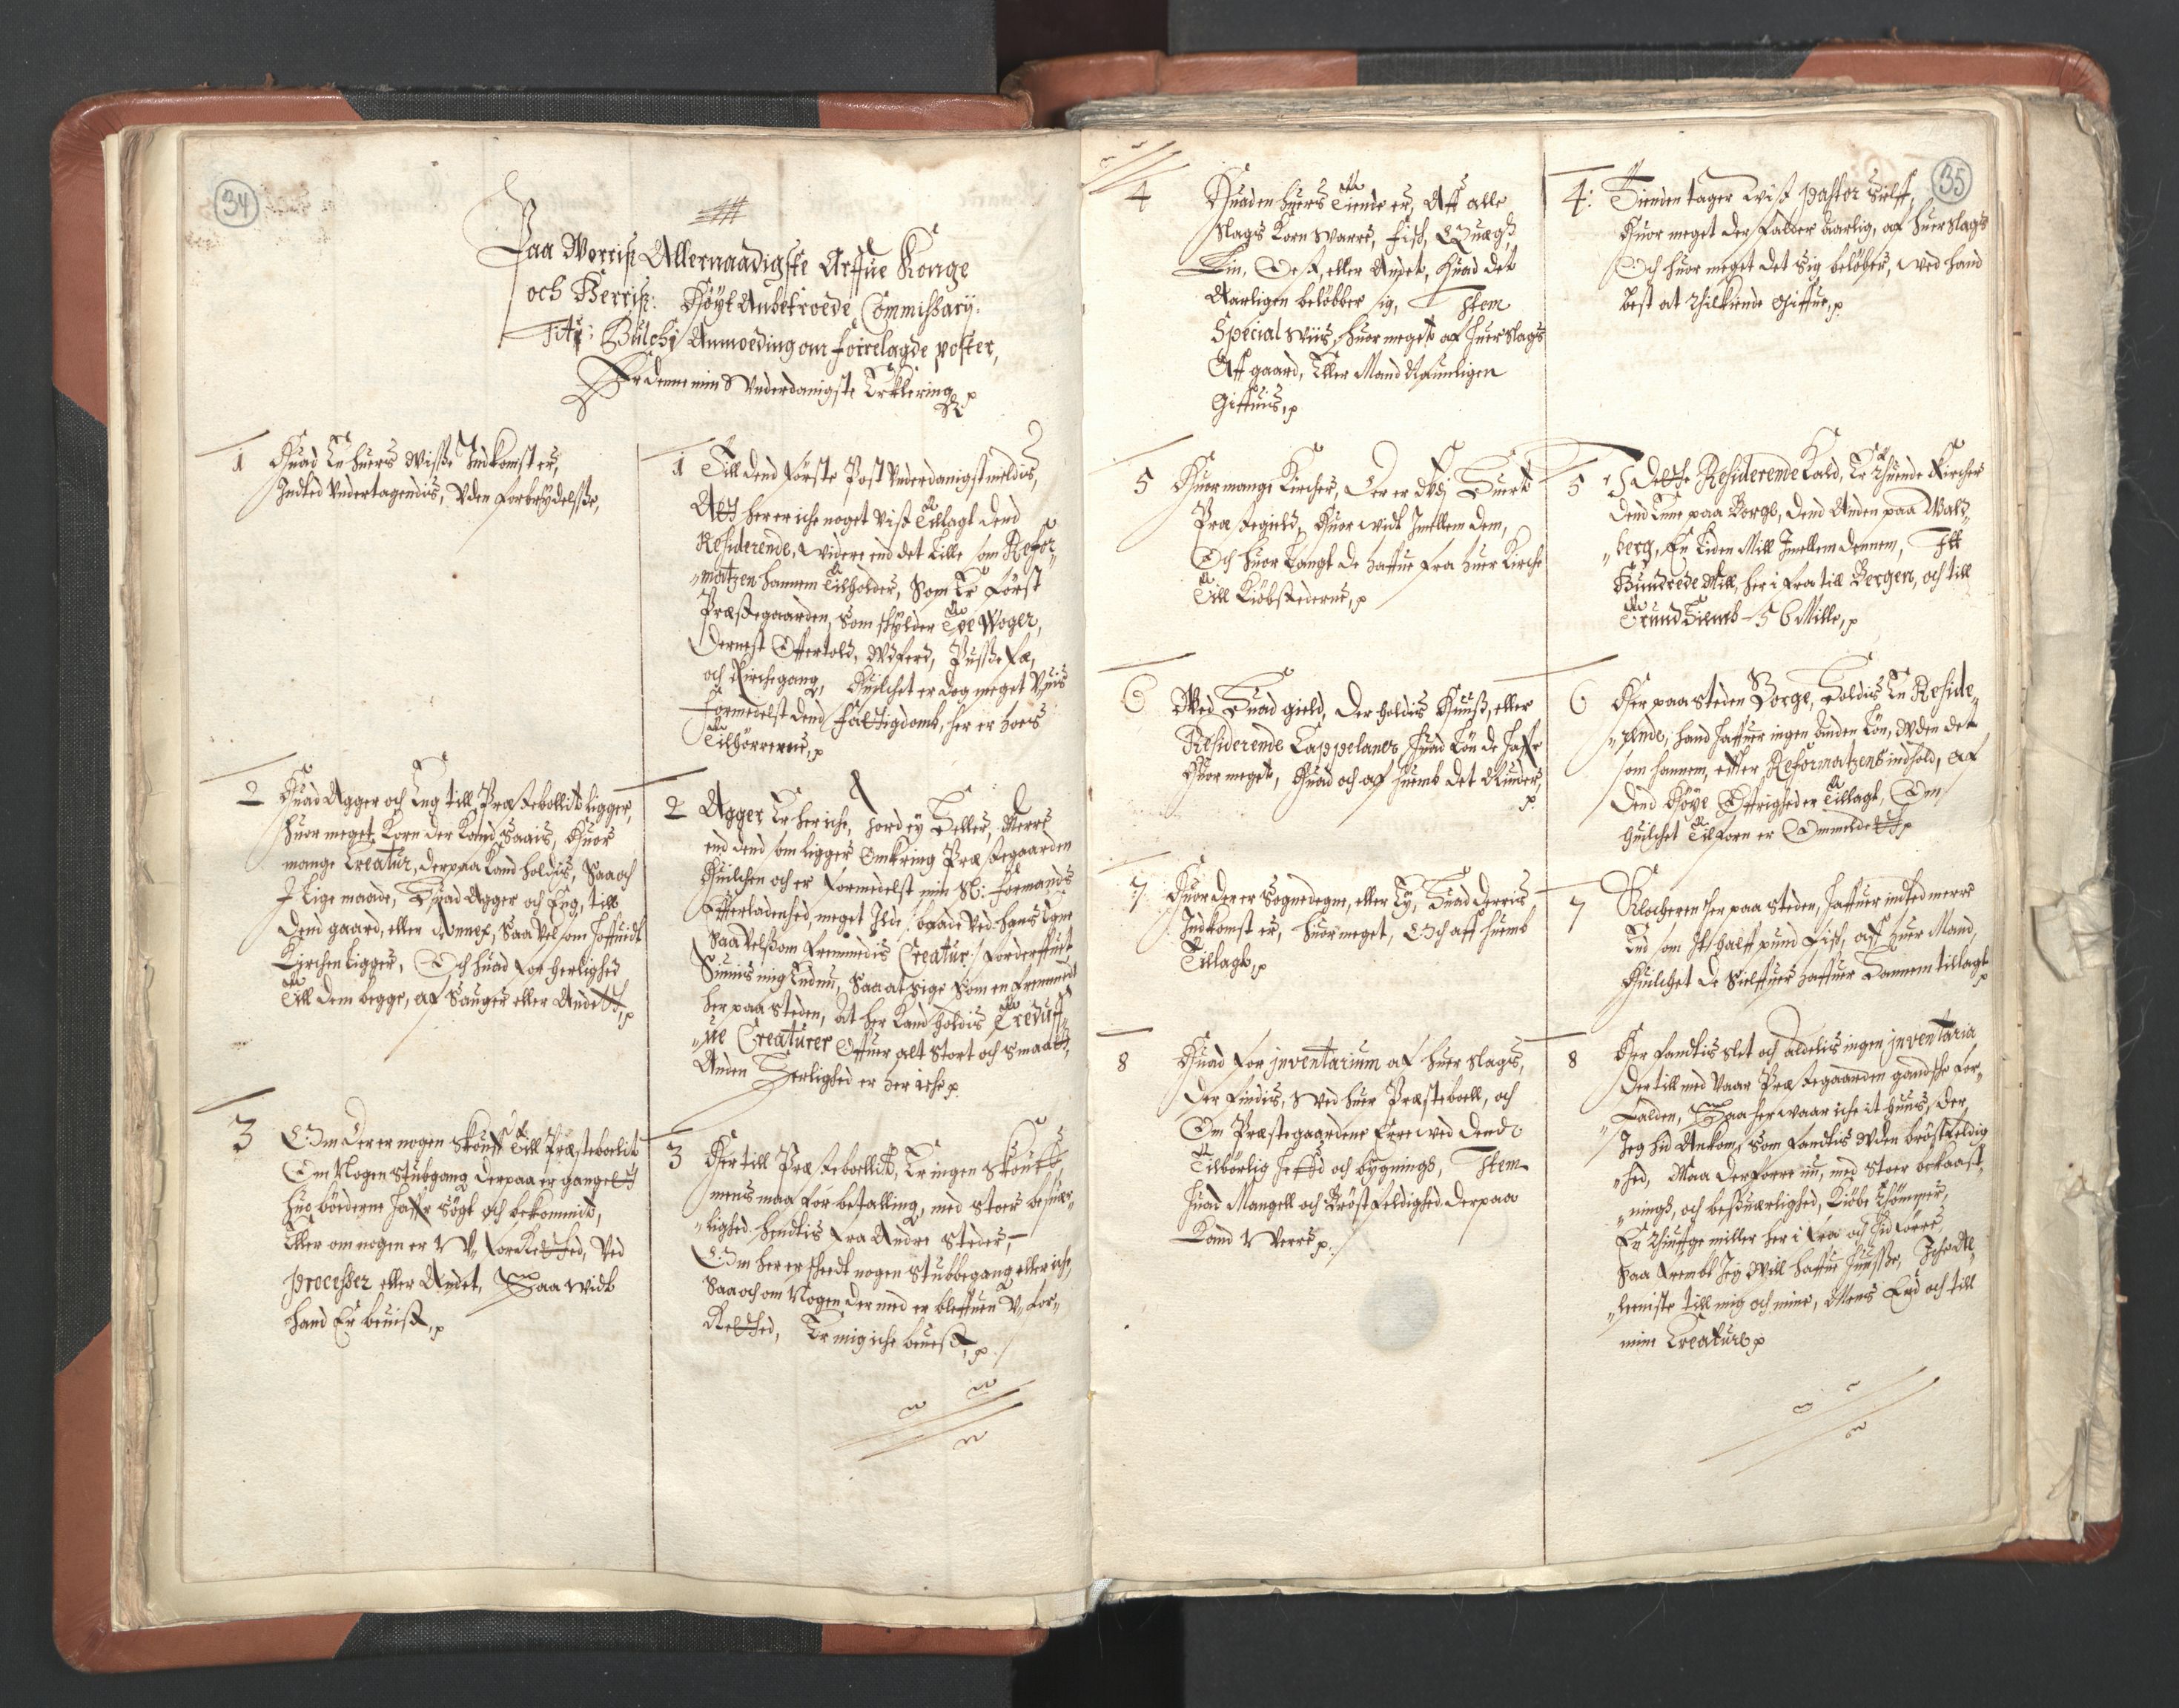 RA, Vicar's Census 1664-1666, no. 36: Lofoten and Vesterålen deanery, Senja deanery and Troms deanery, 1664-1666, p. 34-35